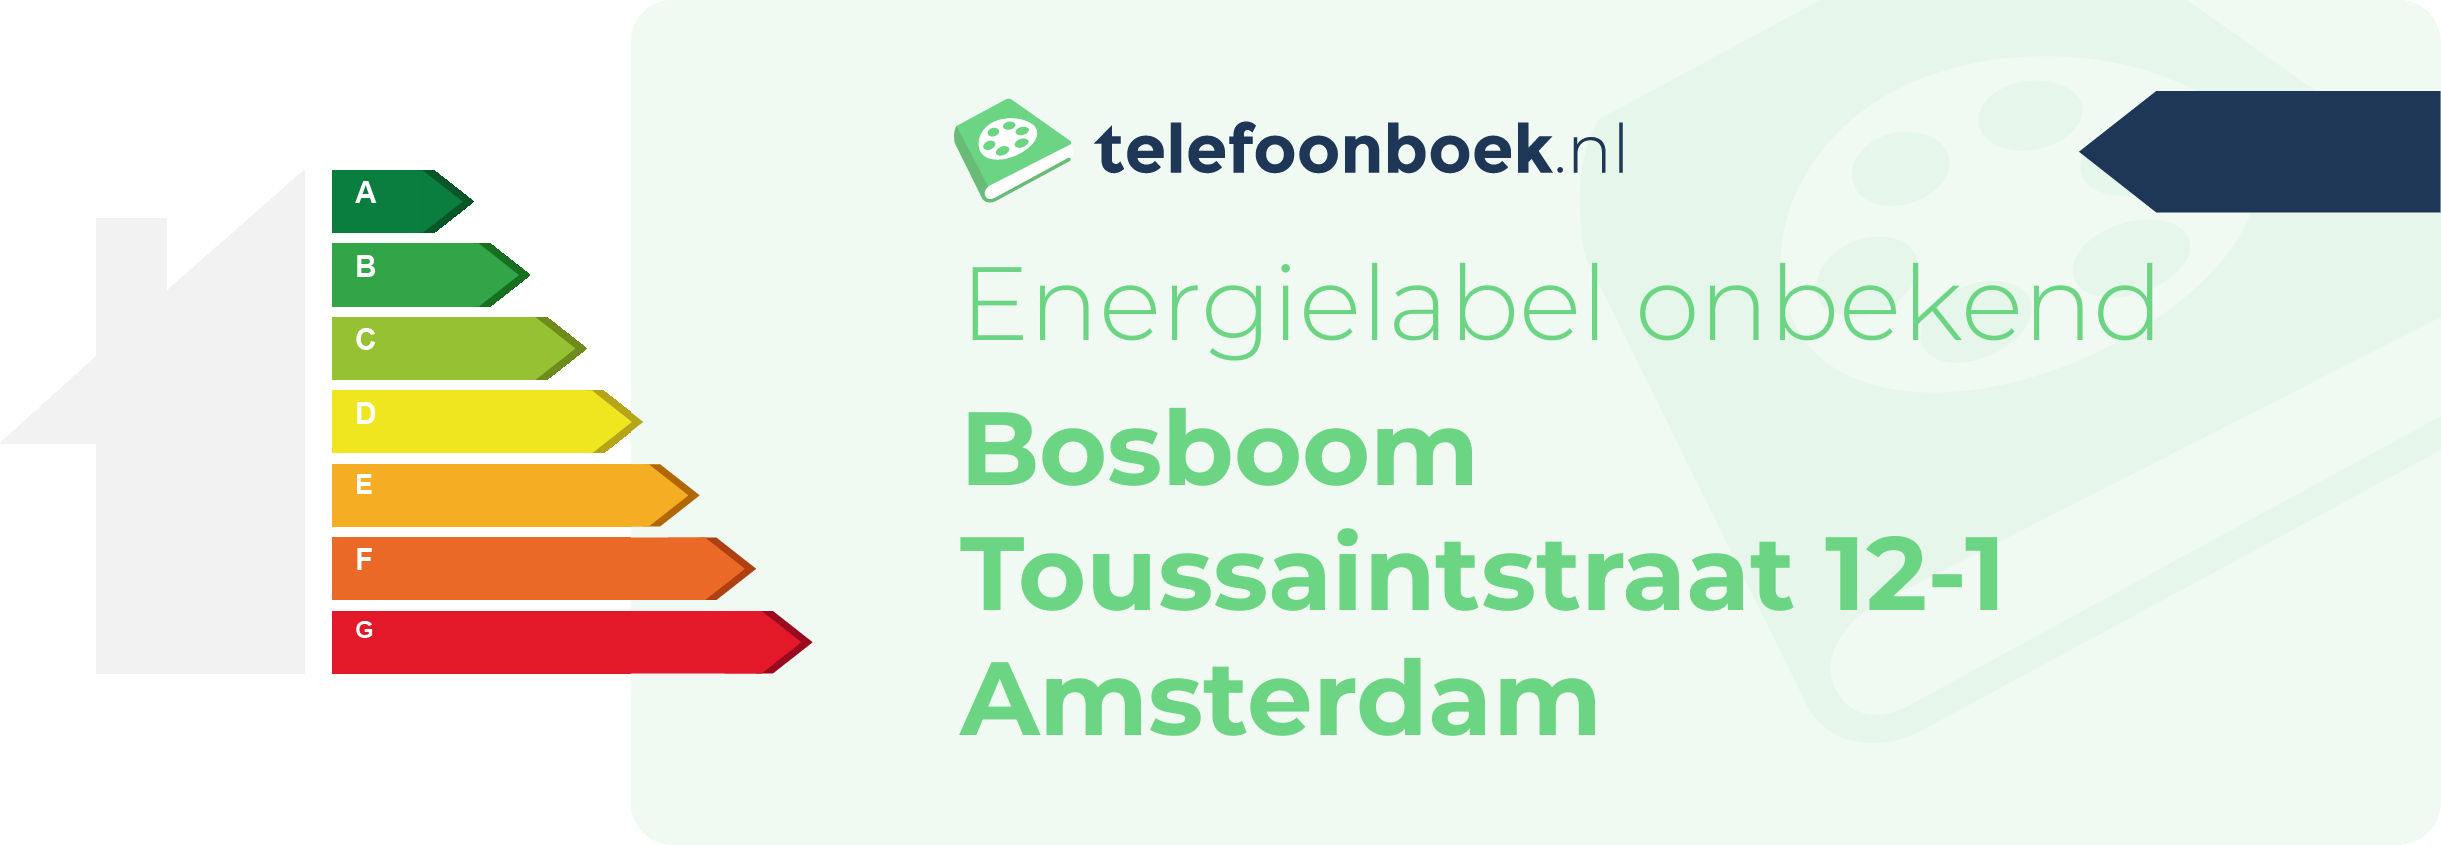 Energielabel Bosboom Toussaintstraat 12-1 Amsterdam